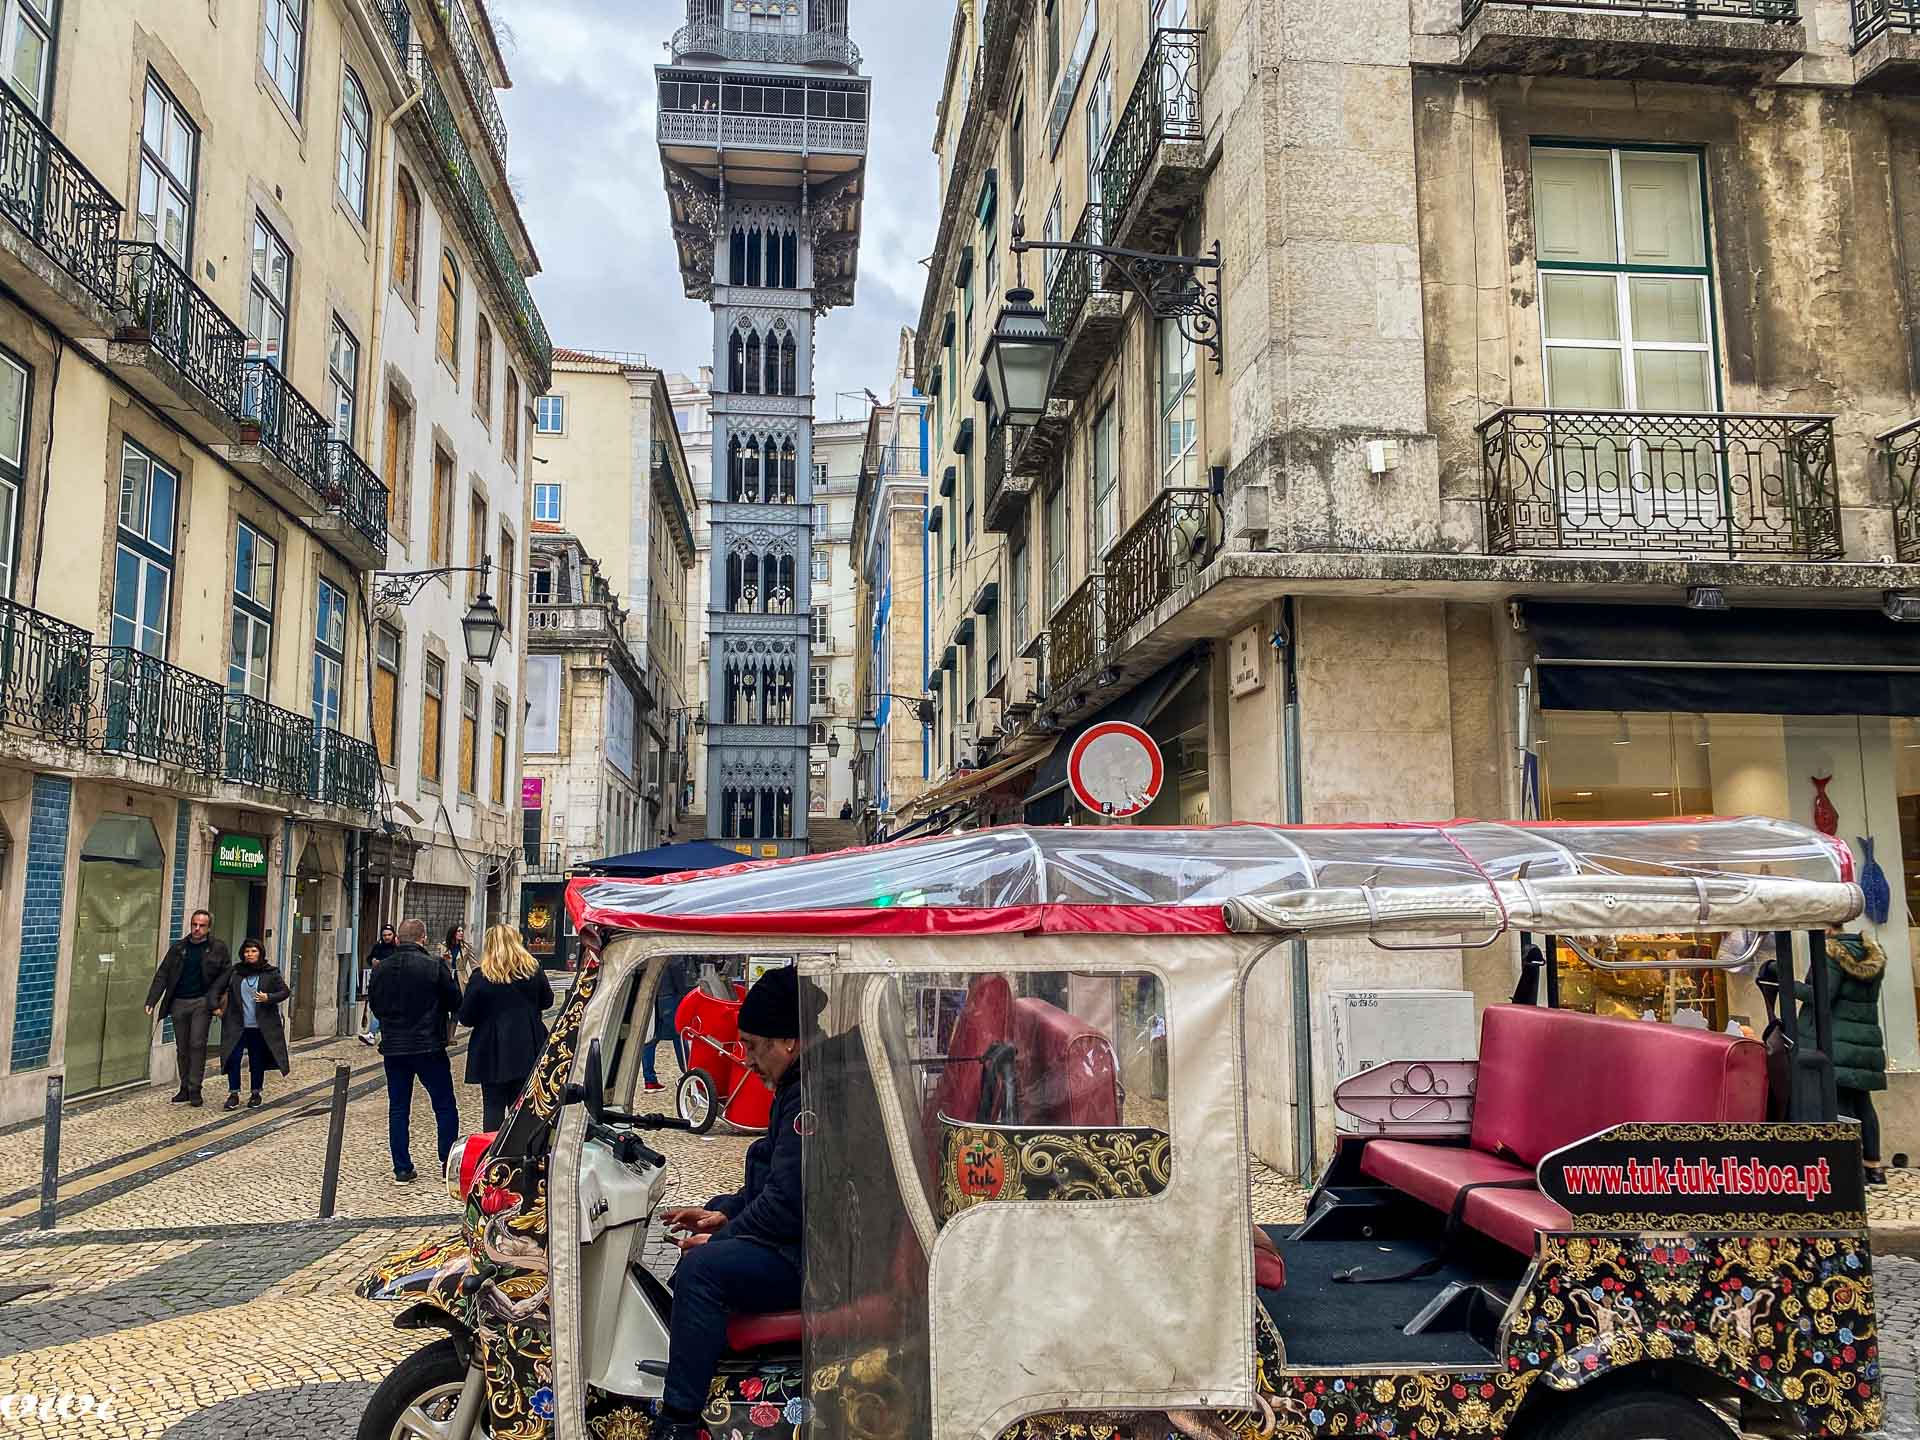 Lizbona Time out market037